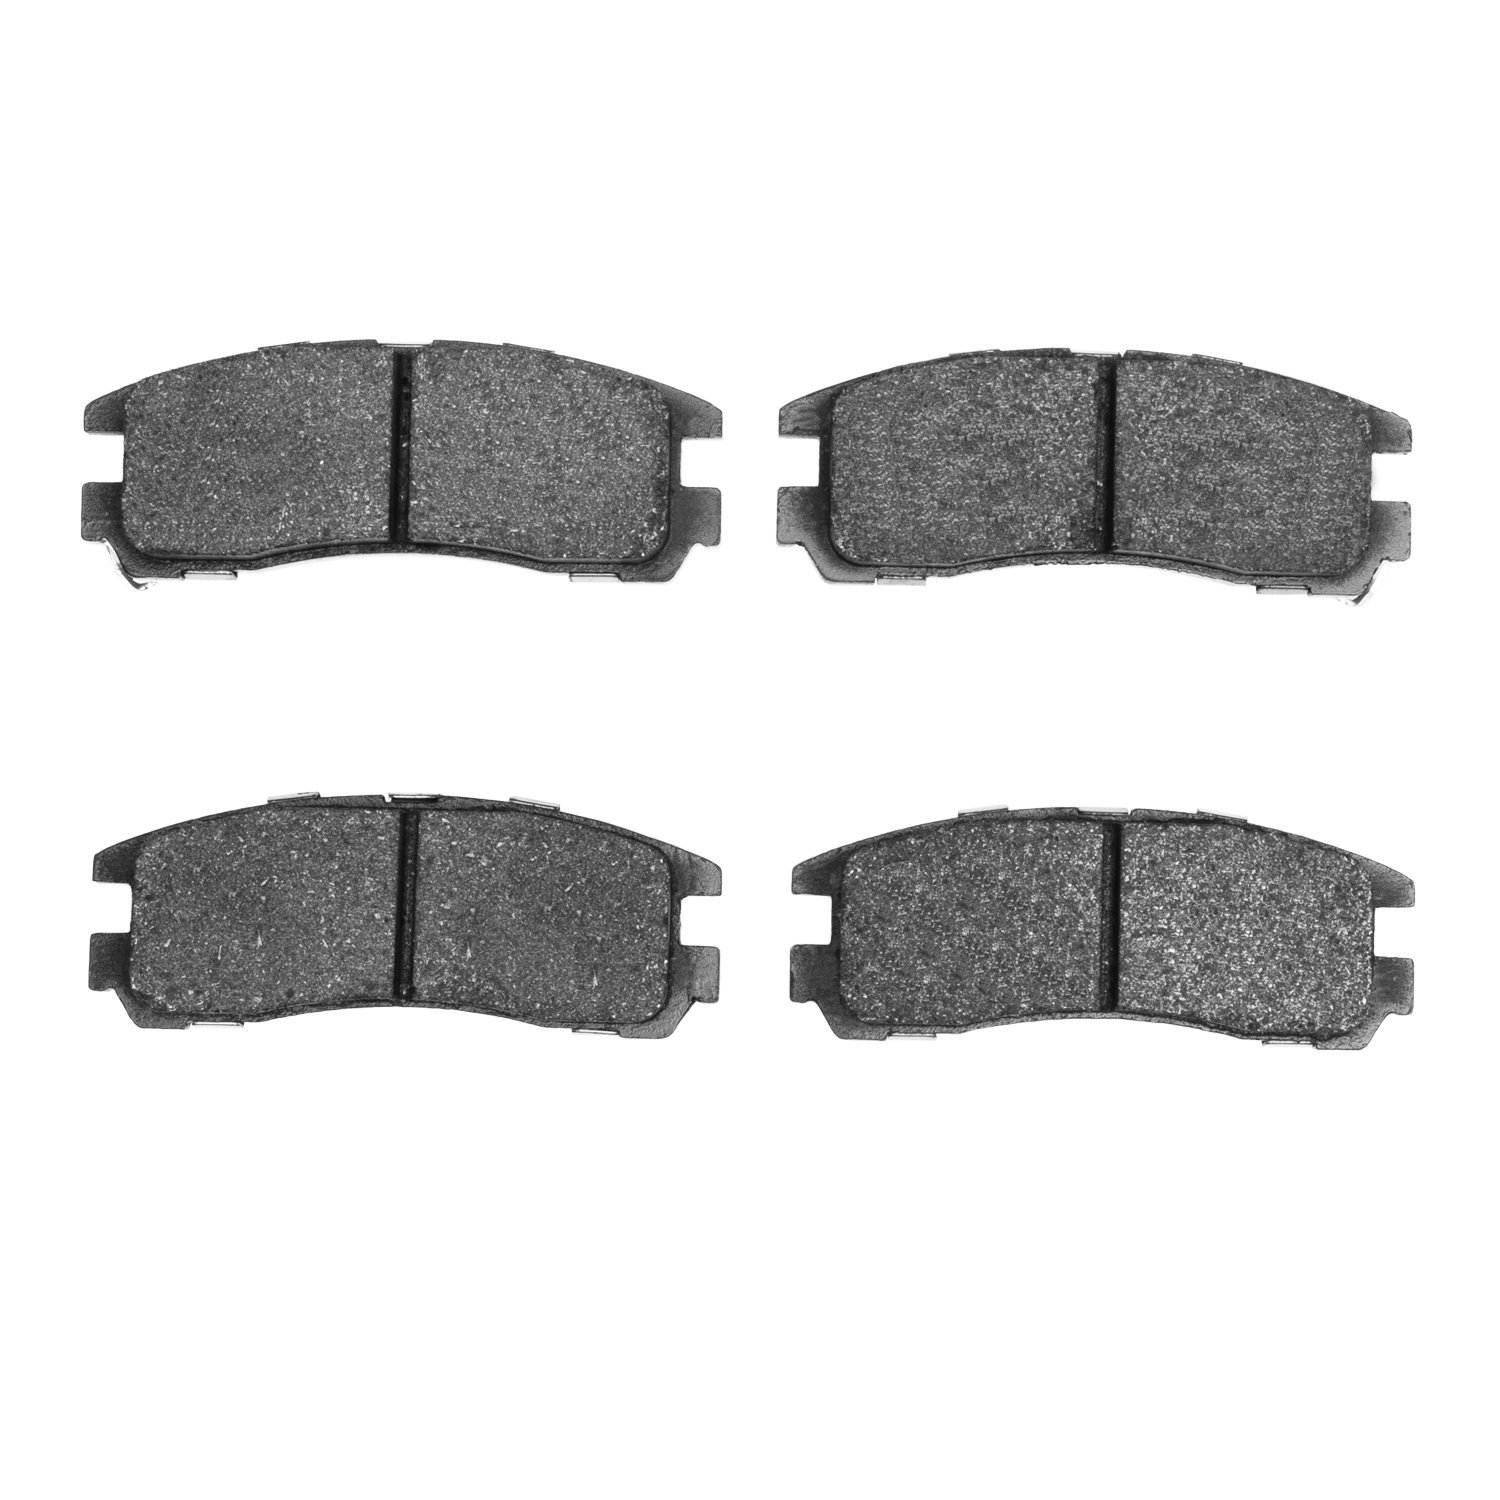 Semi-Metallic Brake Pads, 1988-2012 Fits Multiple Makes/Models, Position: Rear